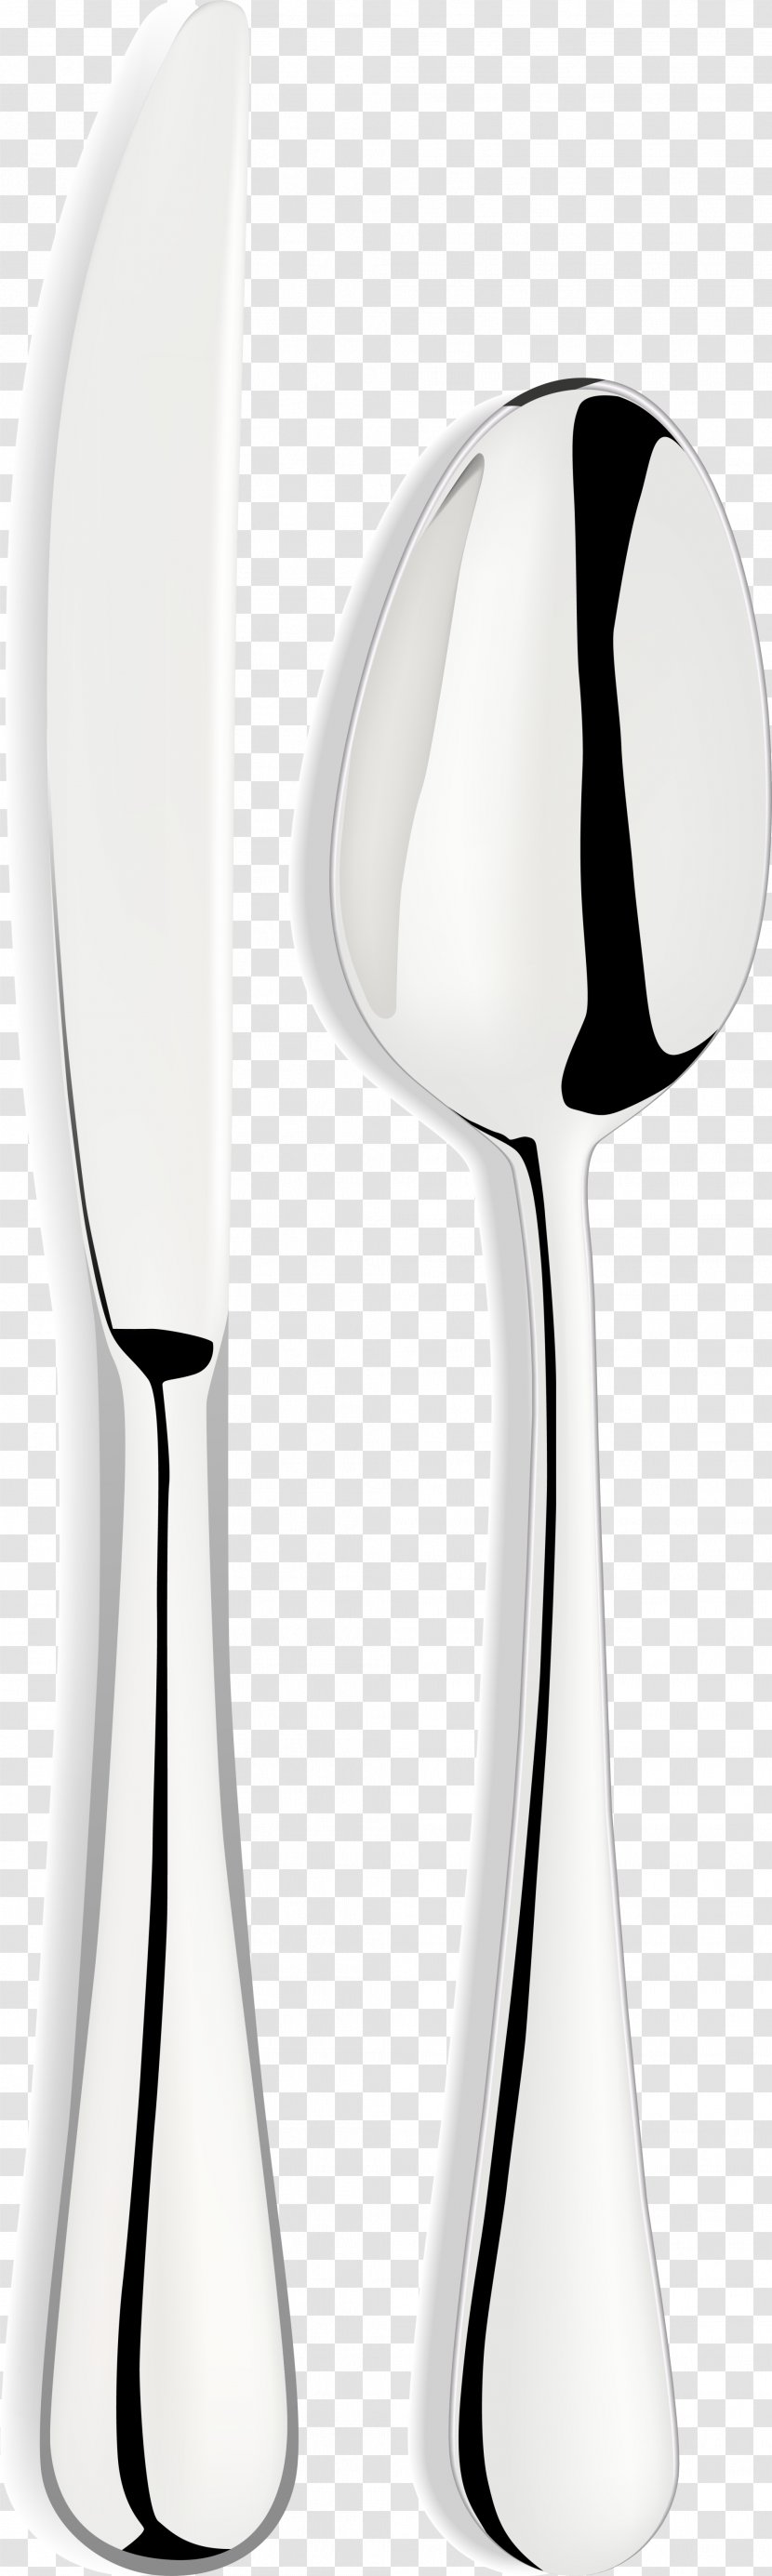 Tableware Cutlery Plate - Gratis - Silver Flatware Transparent PNG